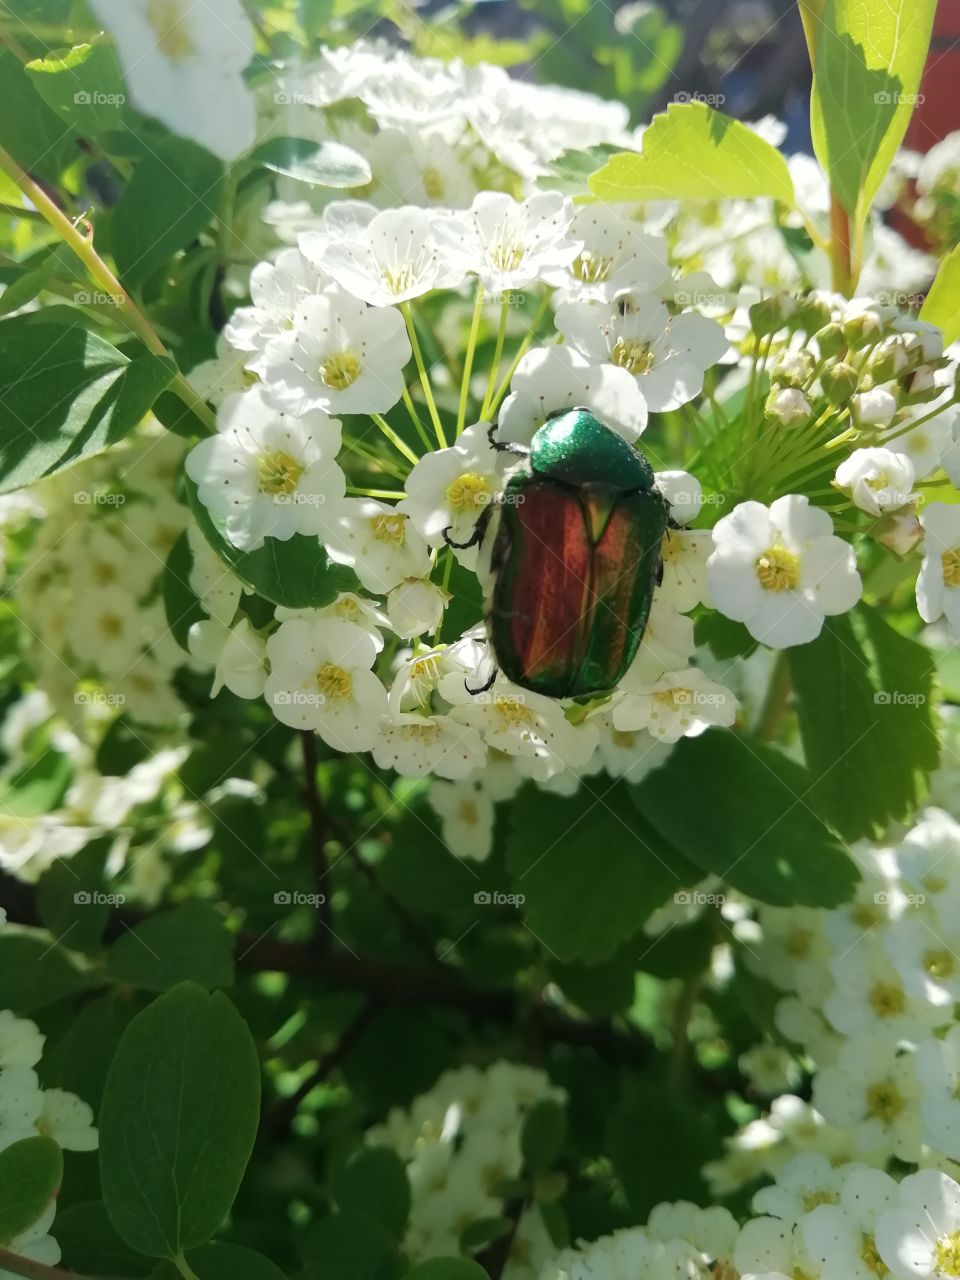 May beetle on flowers